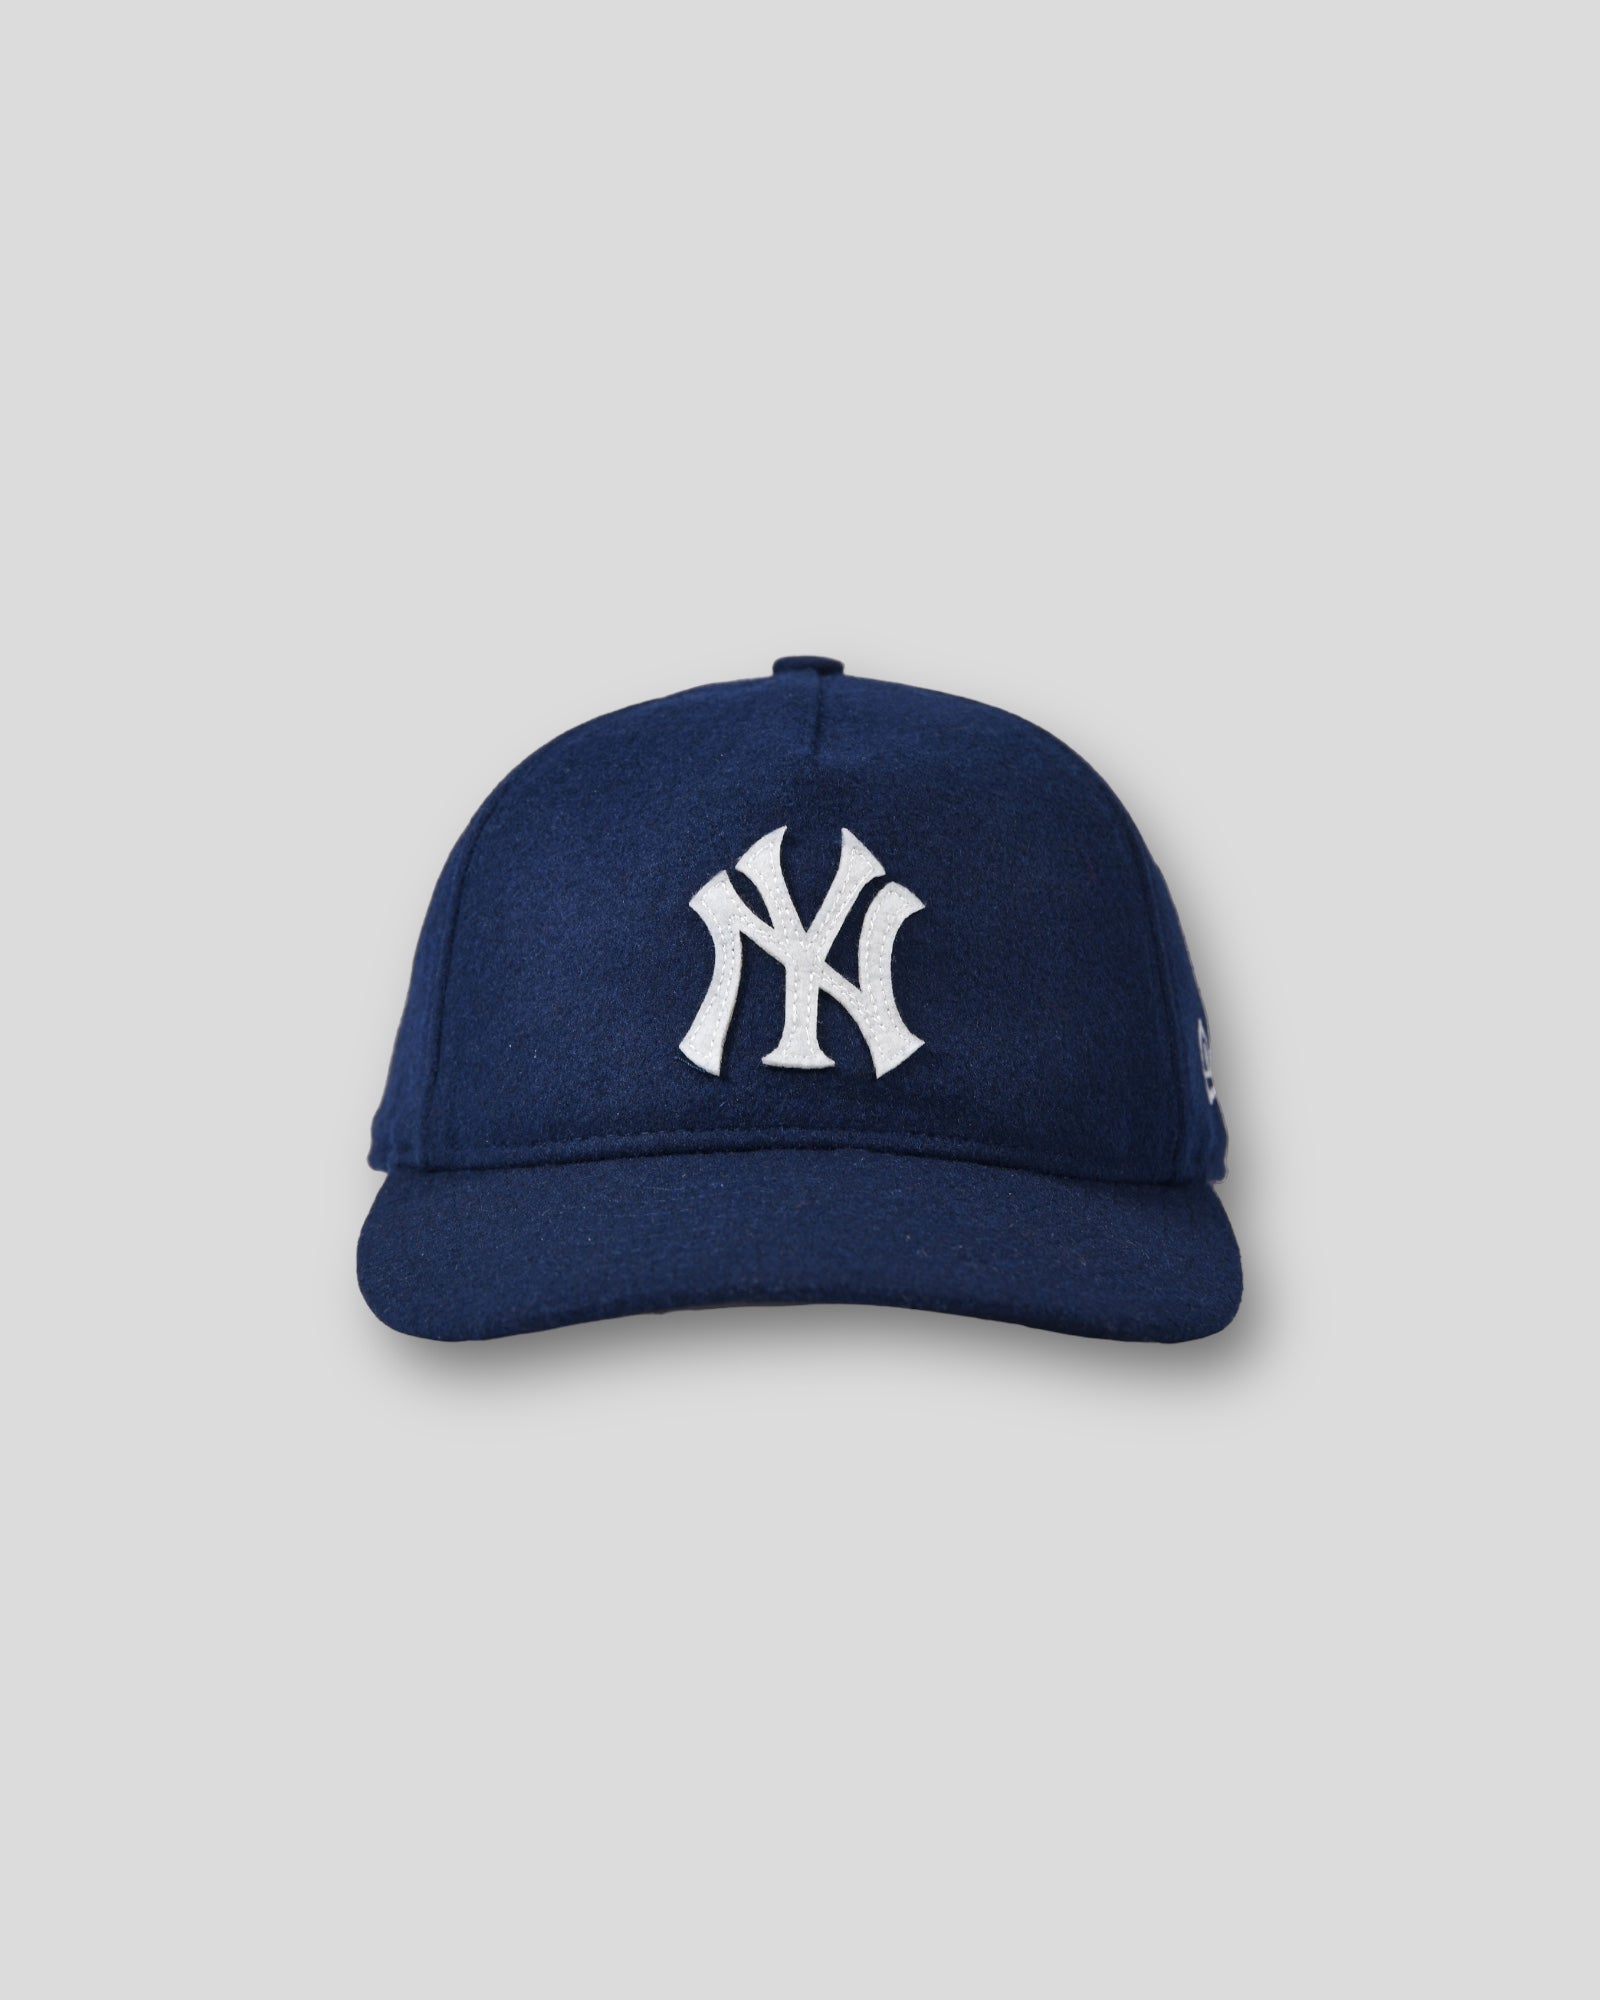 New Era || MLB Coop 9FIFTY New York Yankees || Navy